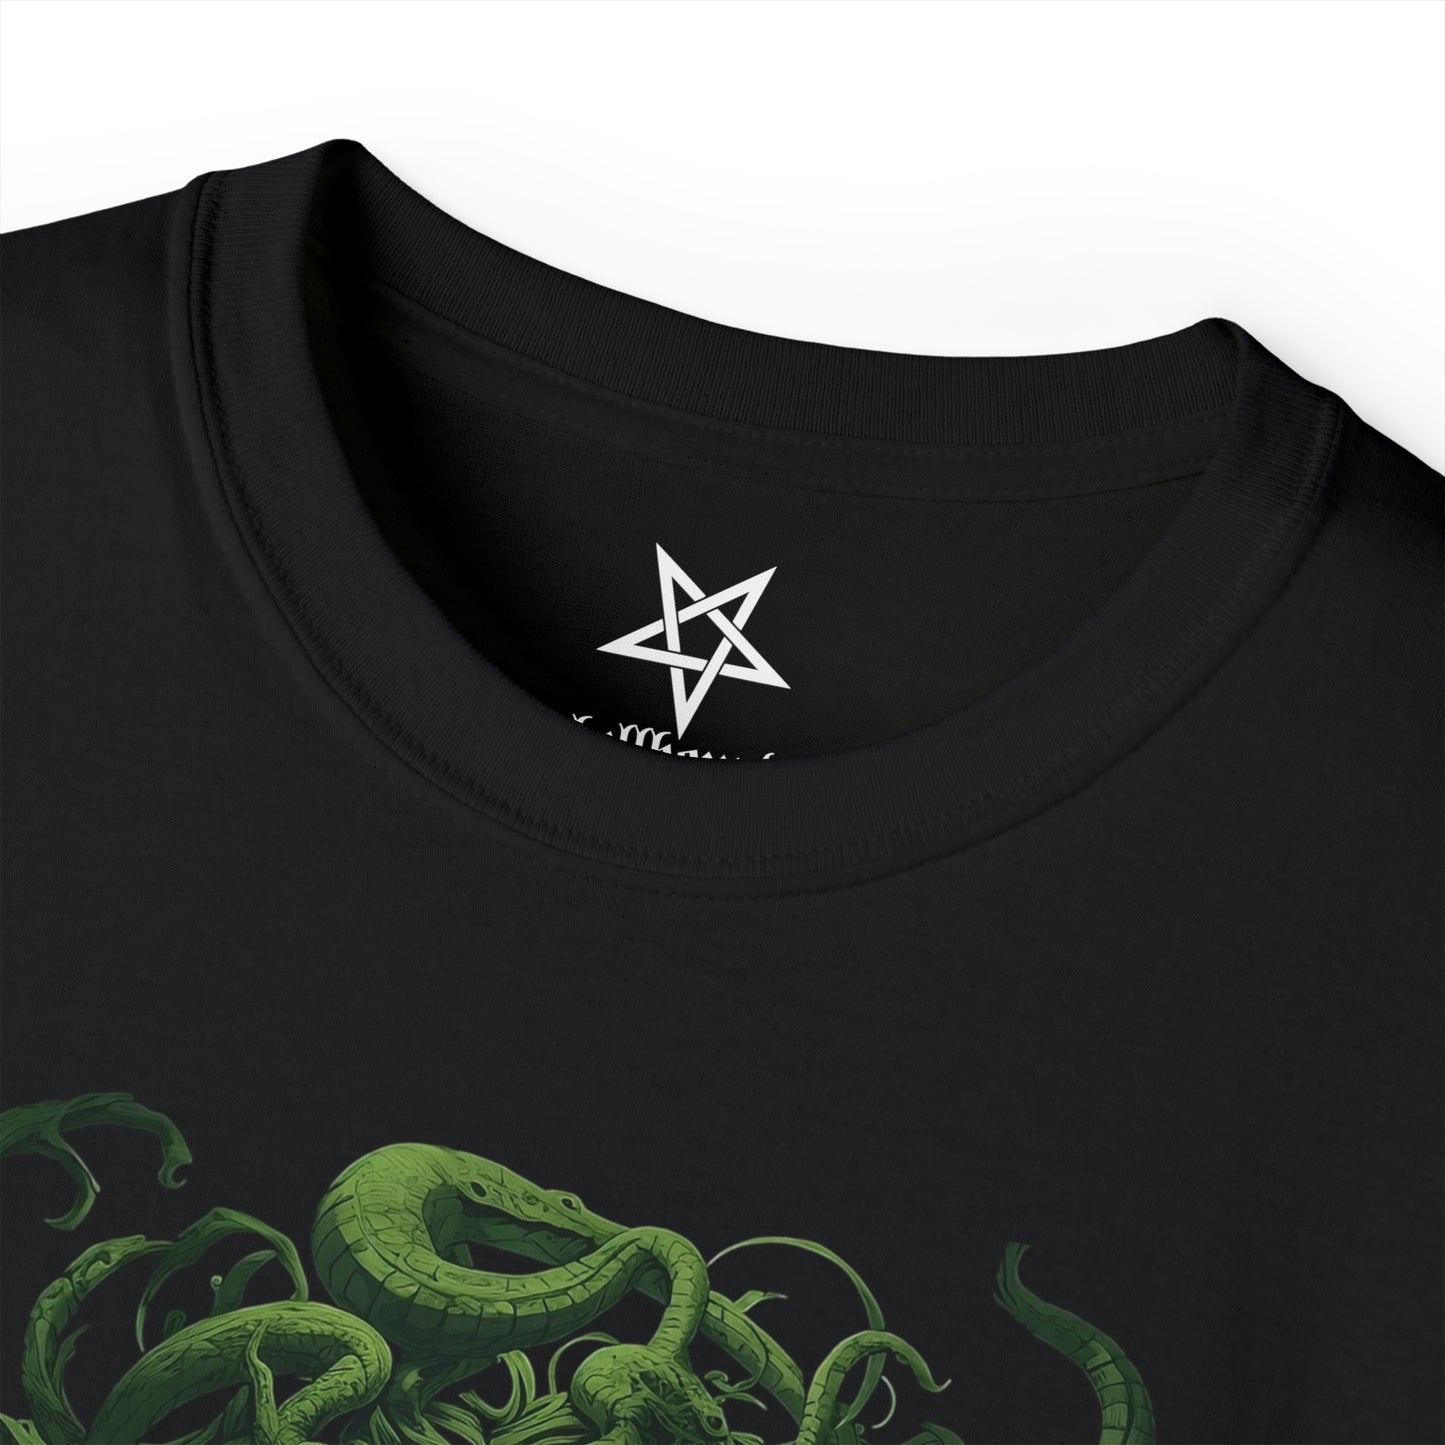 Medusa's Visage T-shirt by Hellhound Clothing